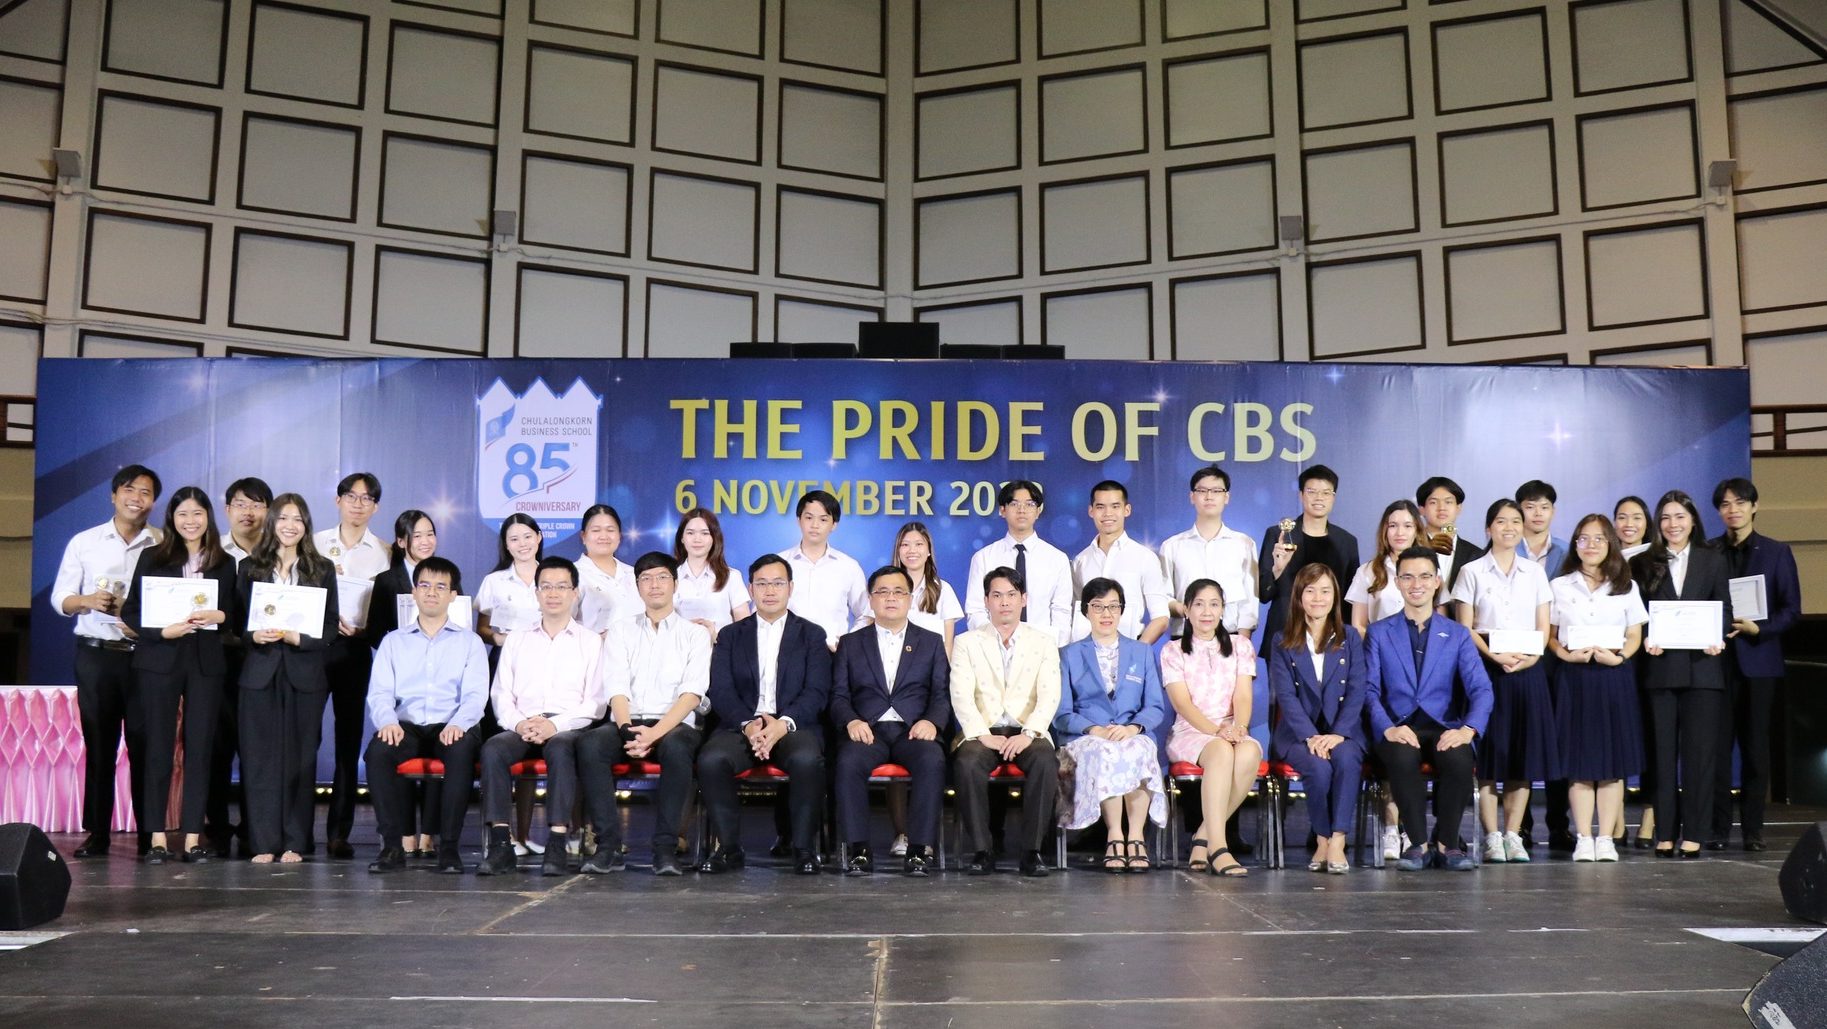 The Pride of CBS